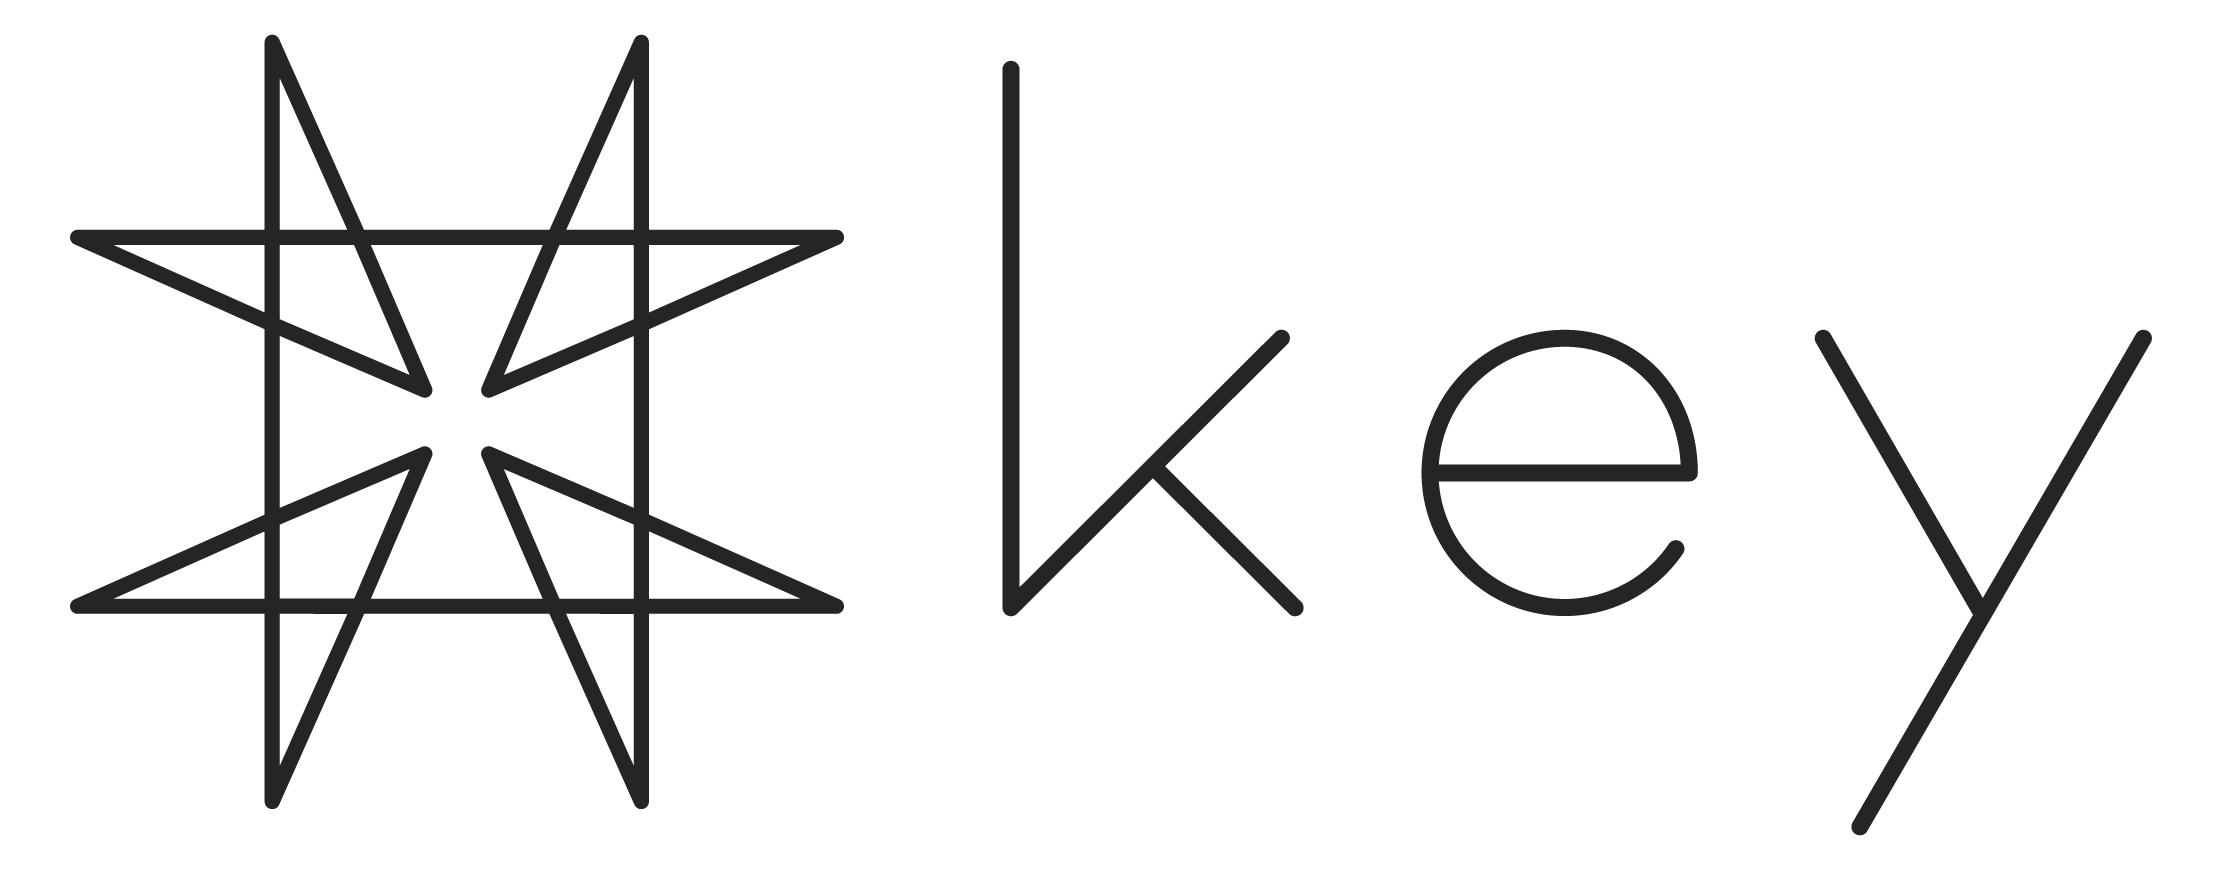 logo for key conceirge